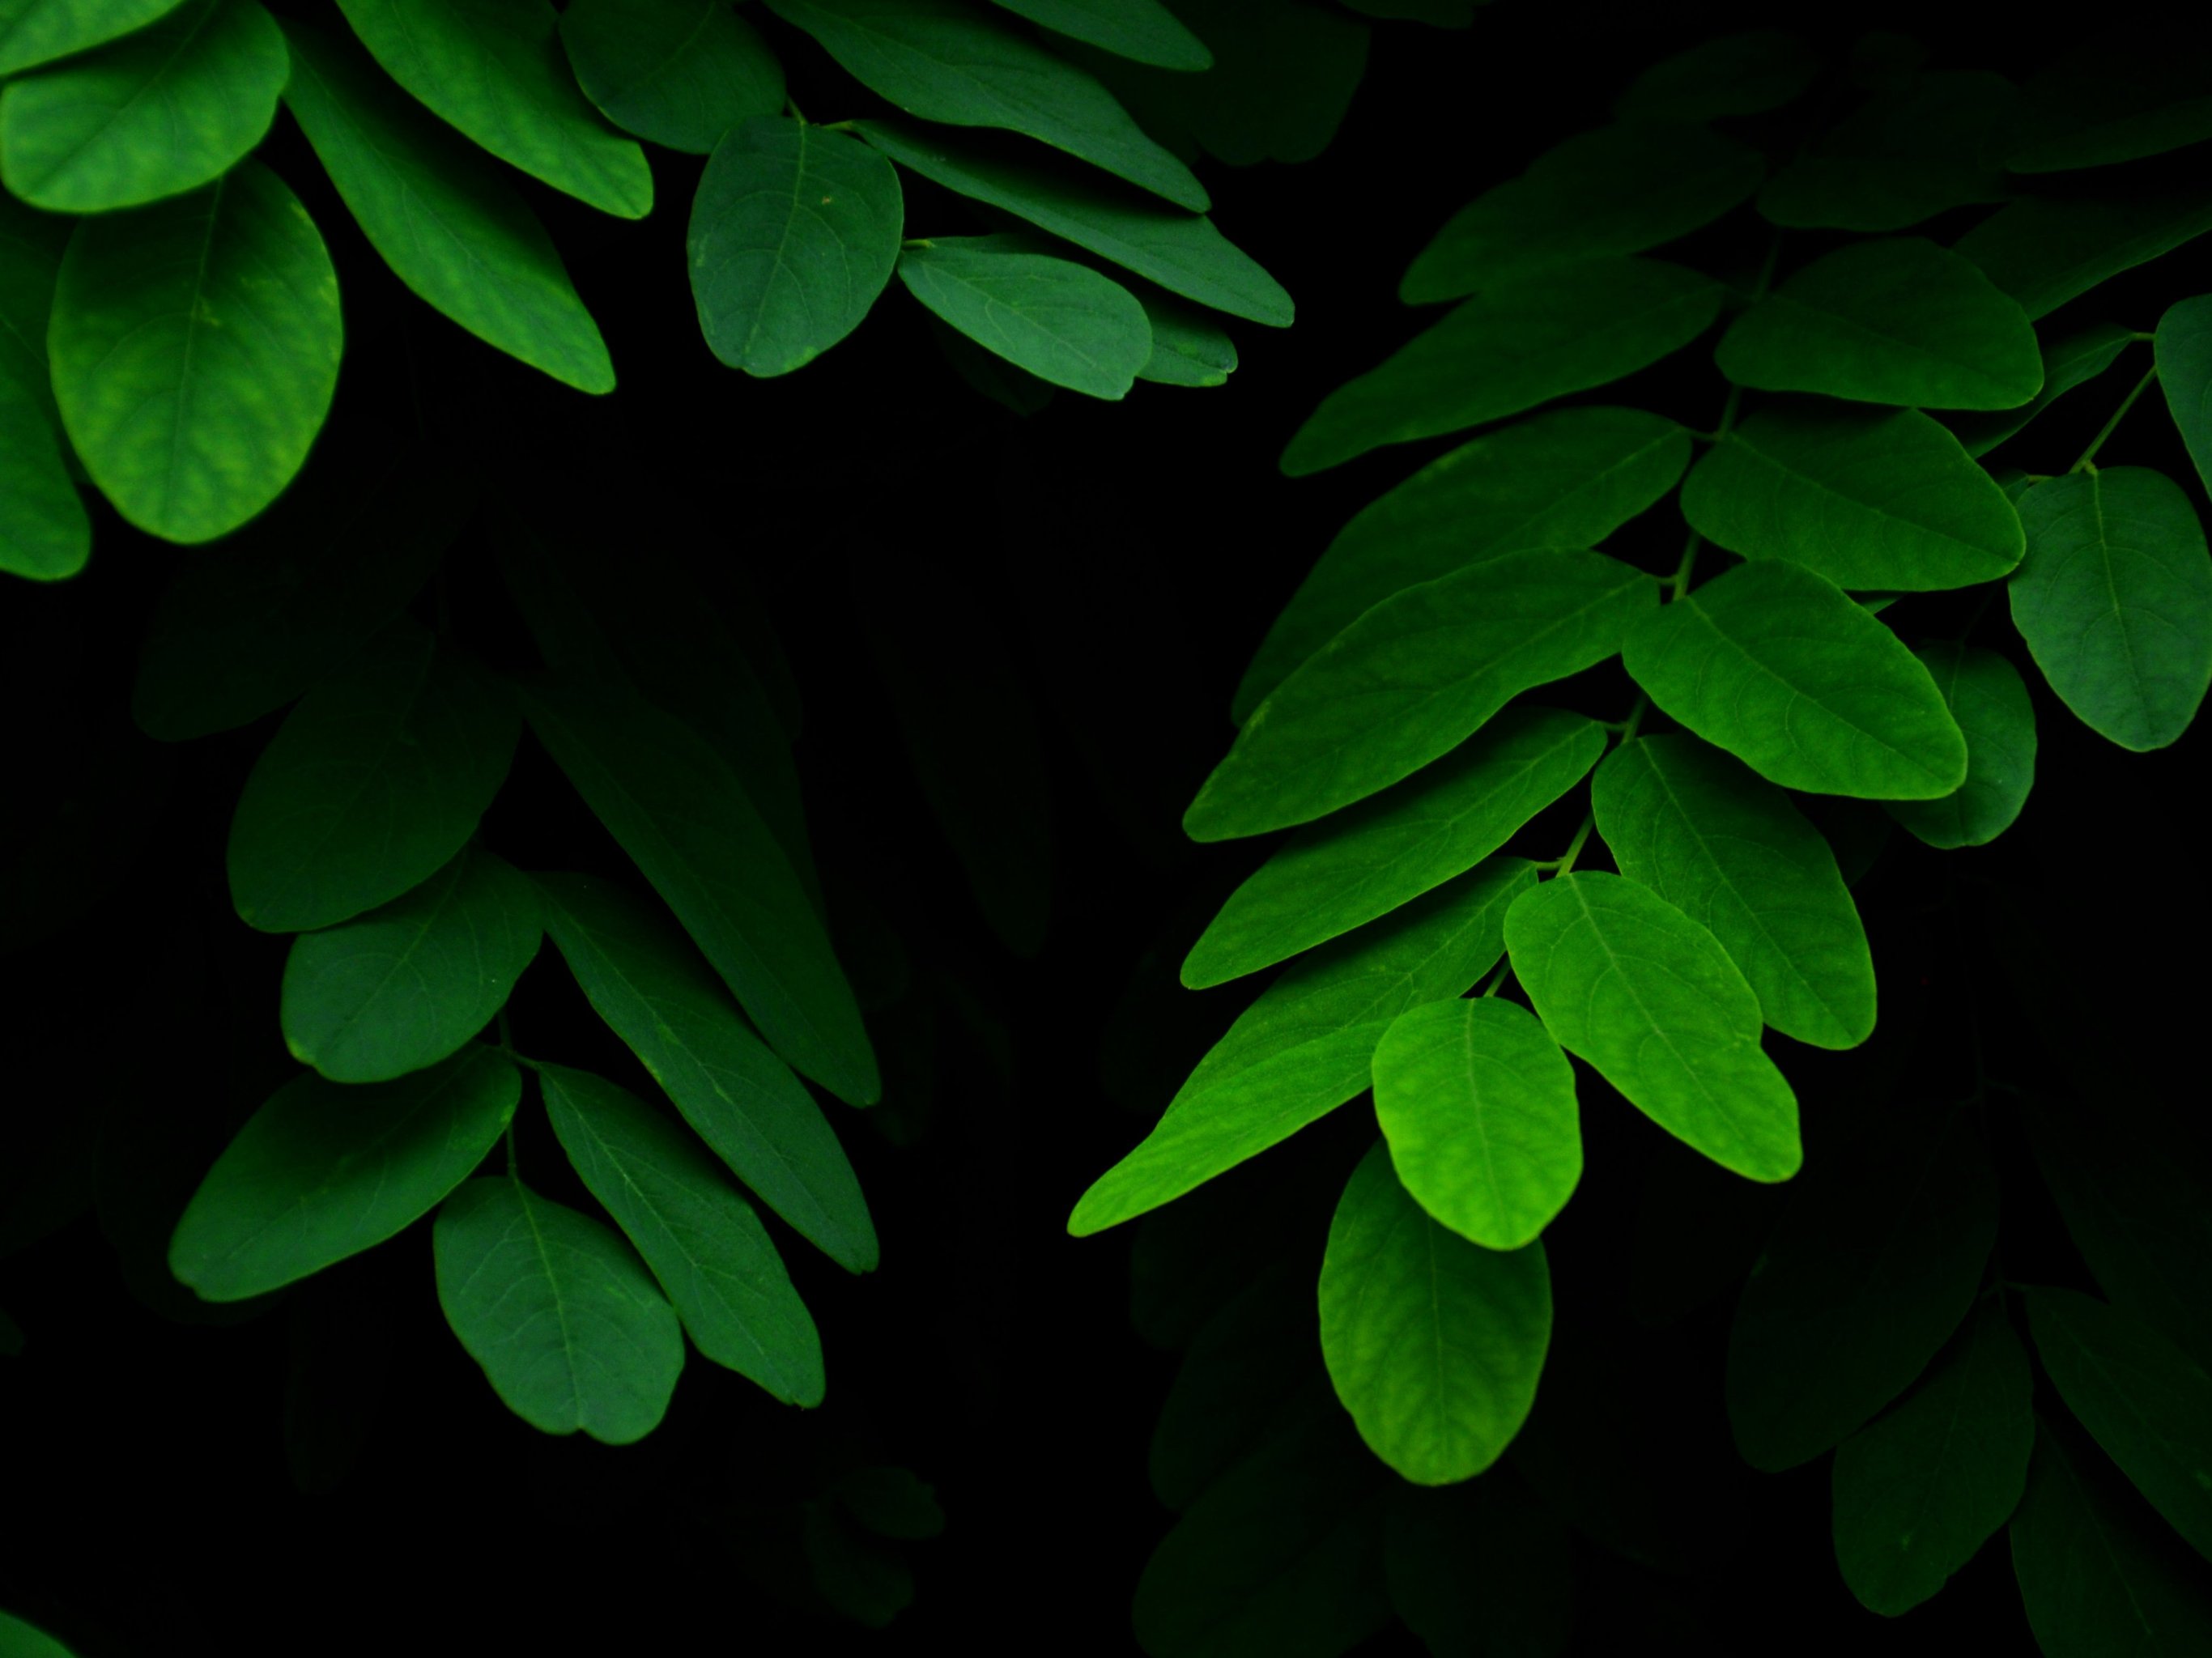 Leaves on Black Background Wallpaper - iPhone, Android & Desktop ...